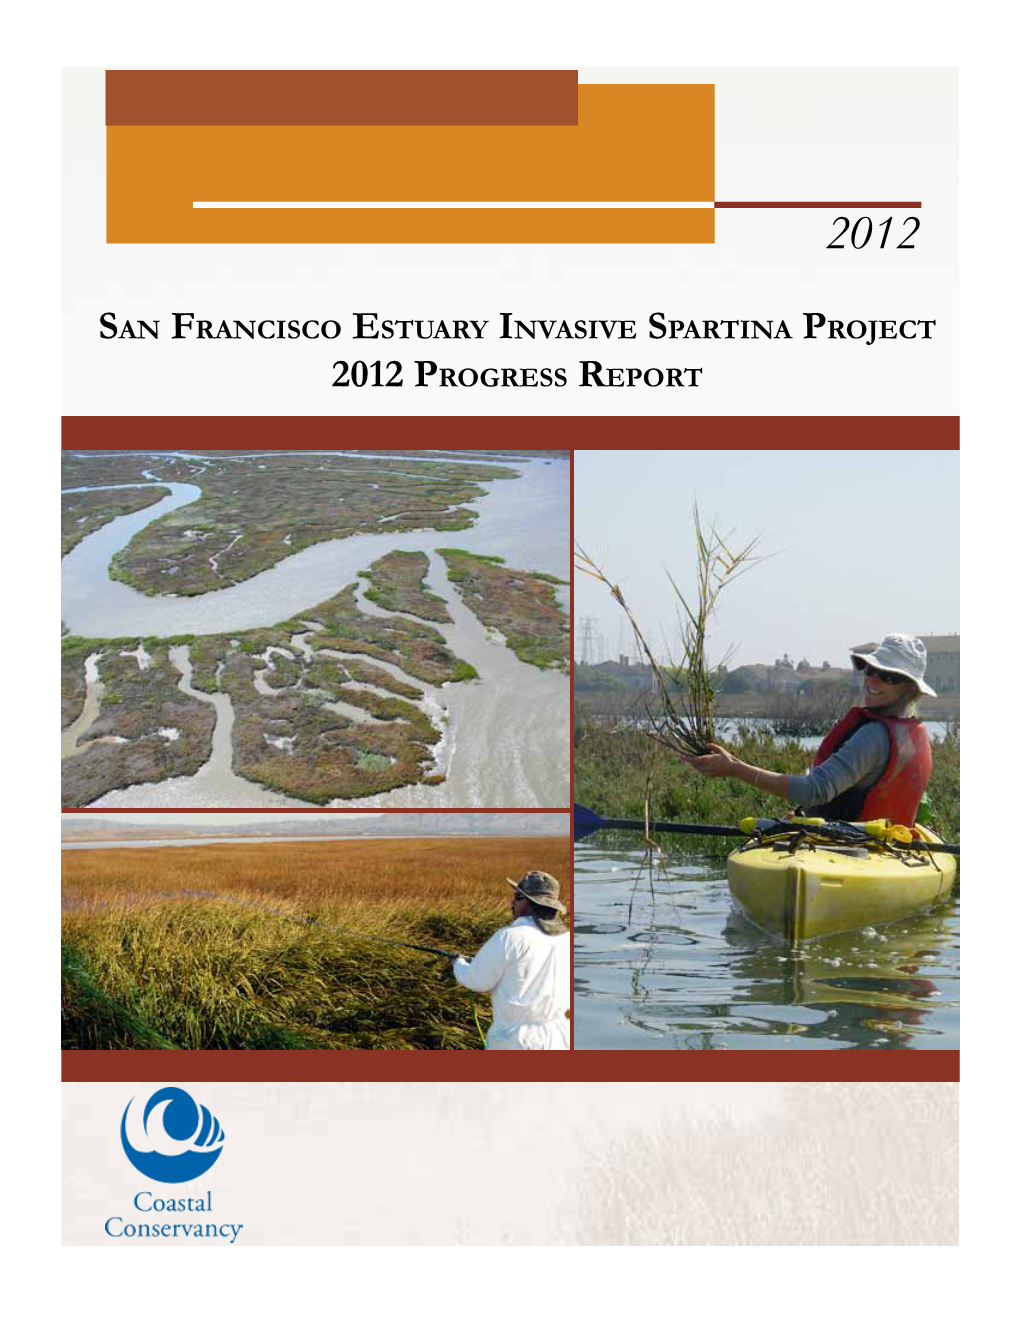 San Francisco Estuary Invasive Spartina Project 2012 Progress Report